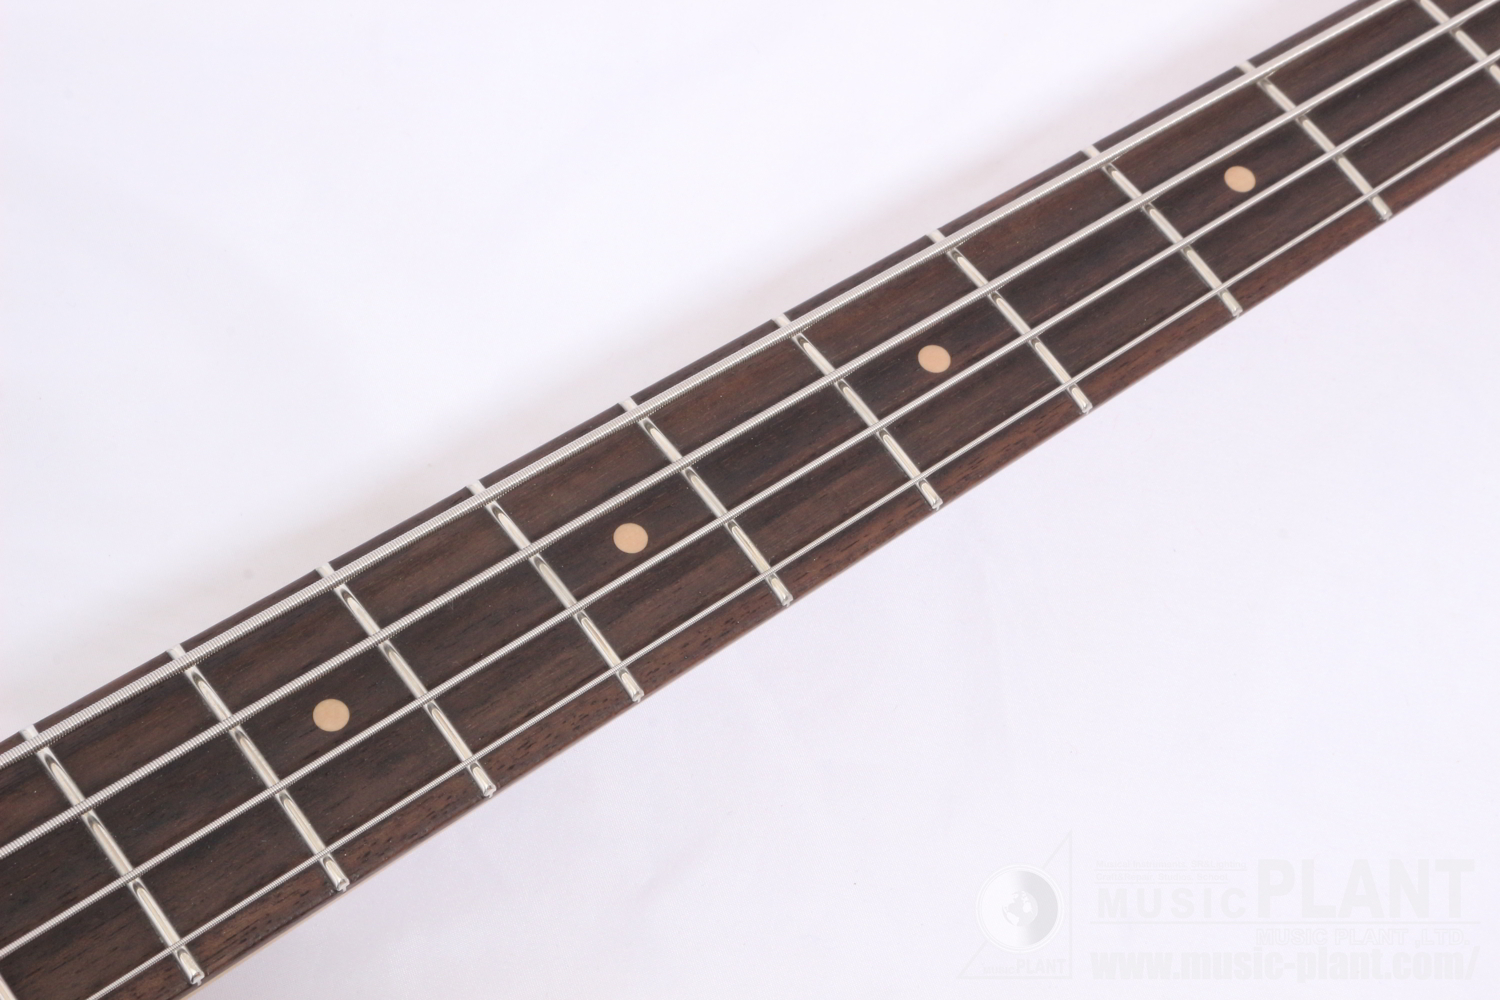 '63 Precision Bass® Journeyman Relic®, Rosewood Fingerboard, Aged Daphne Blue追加画像